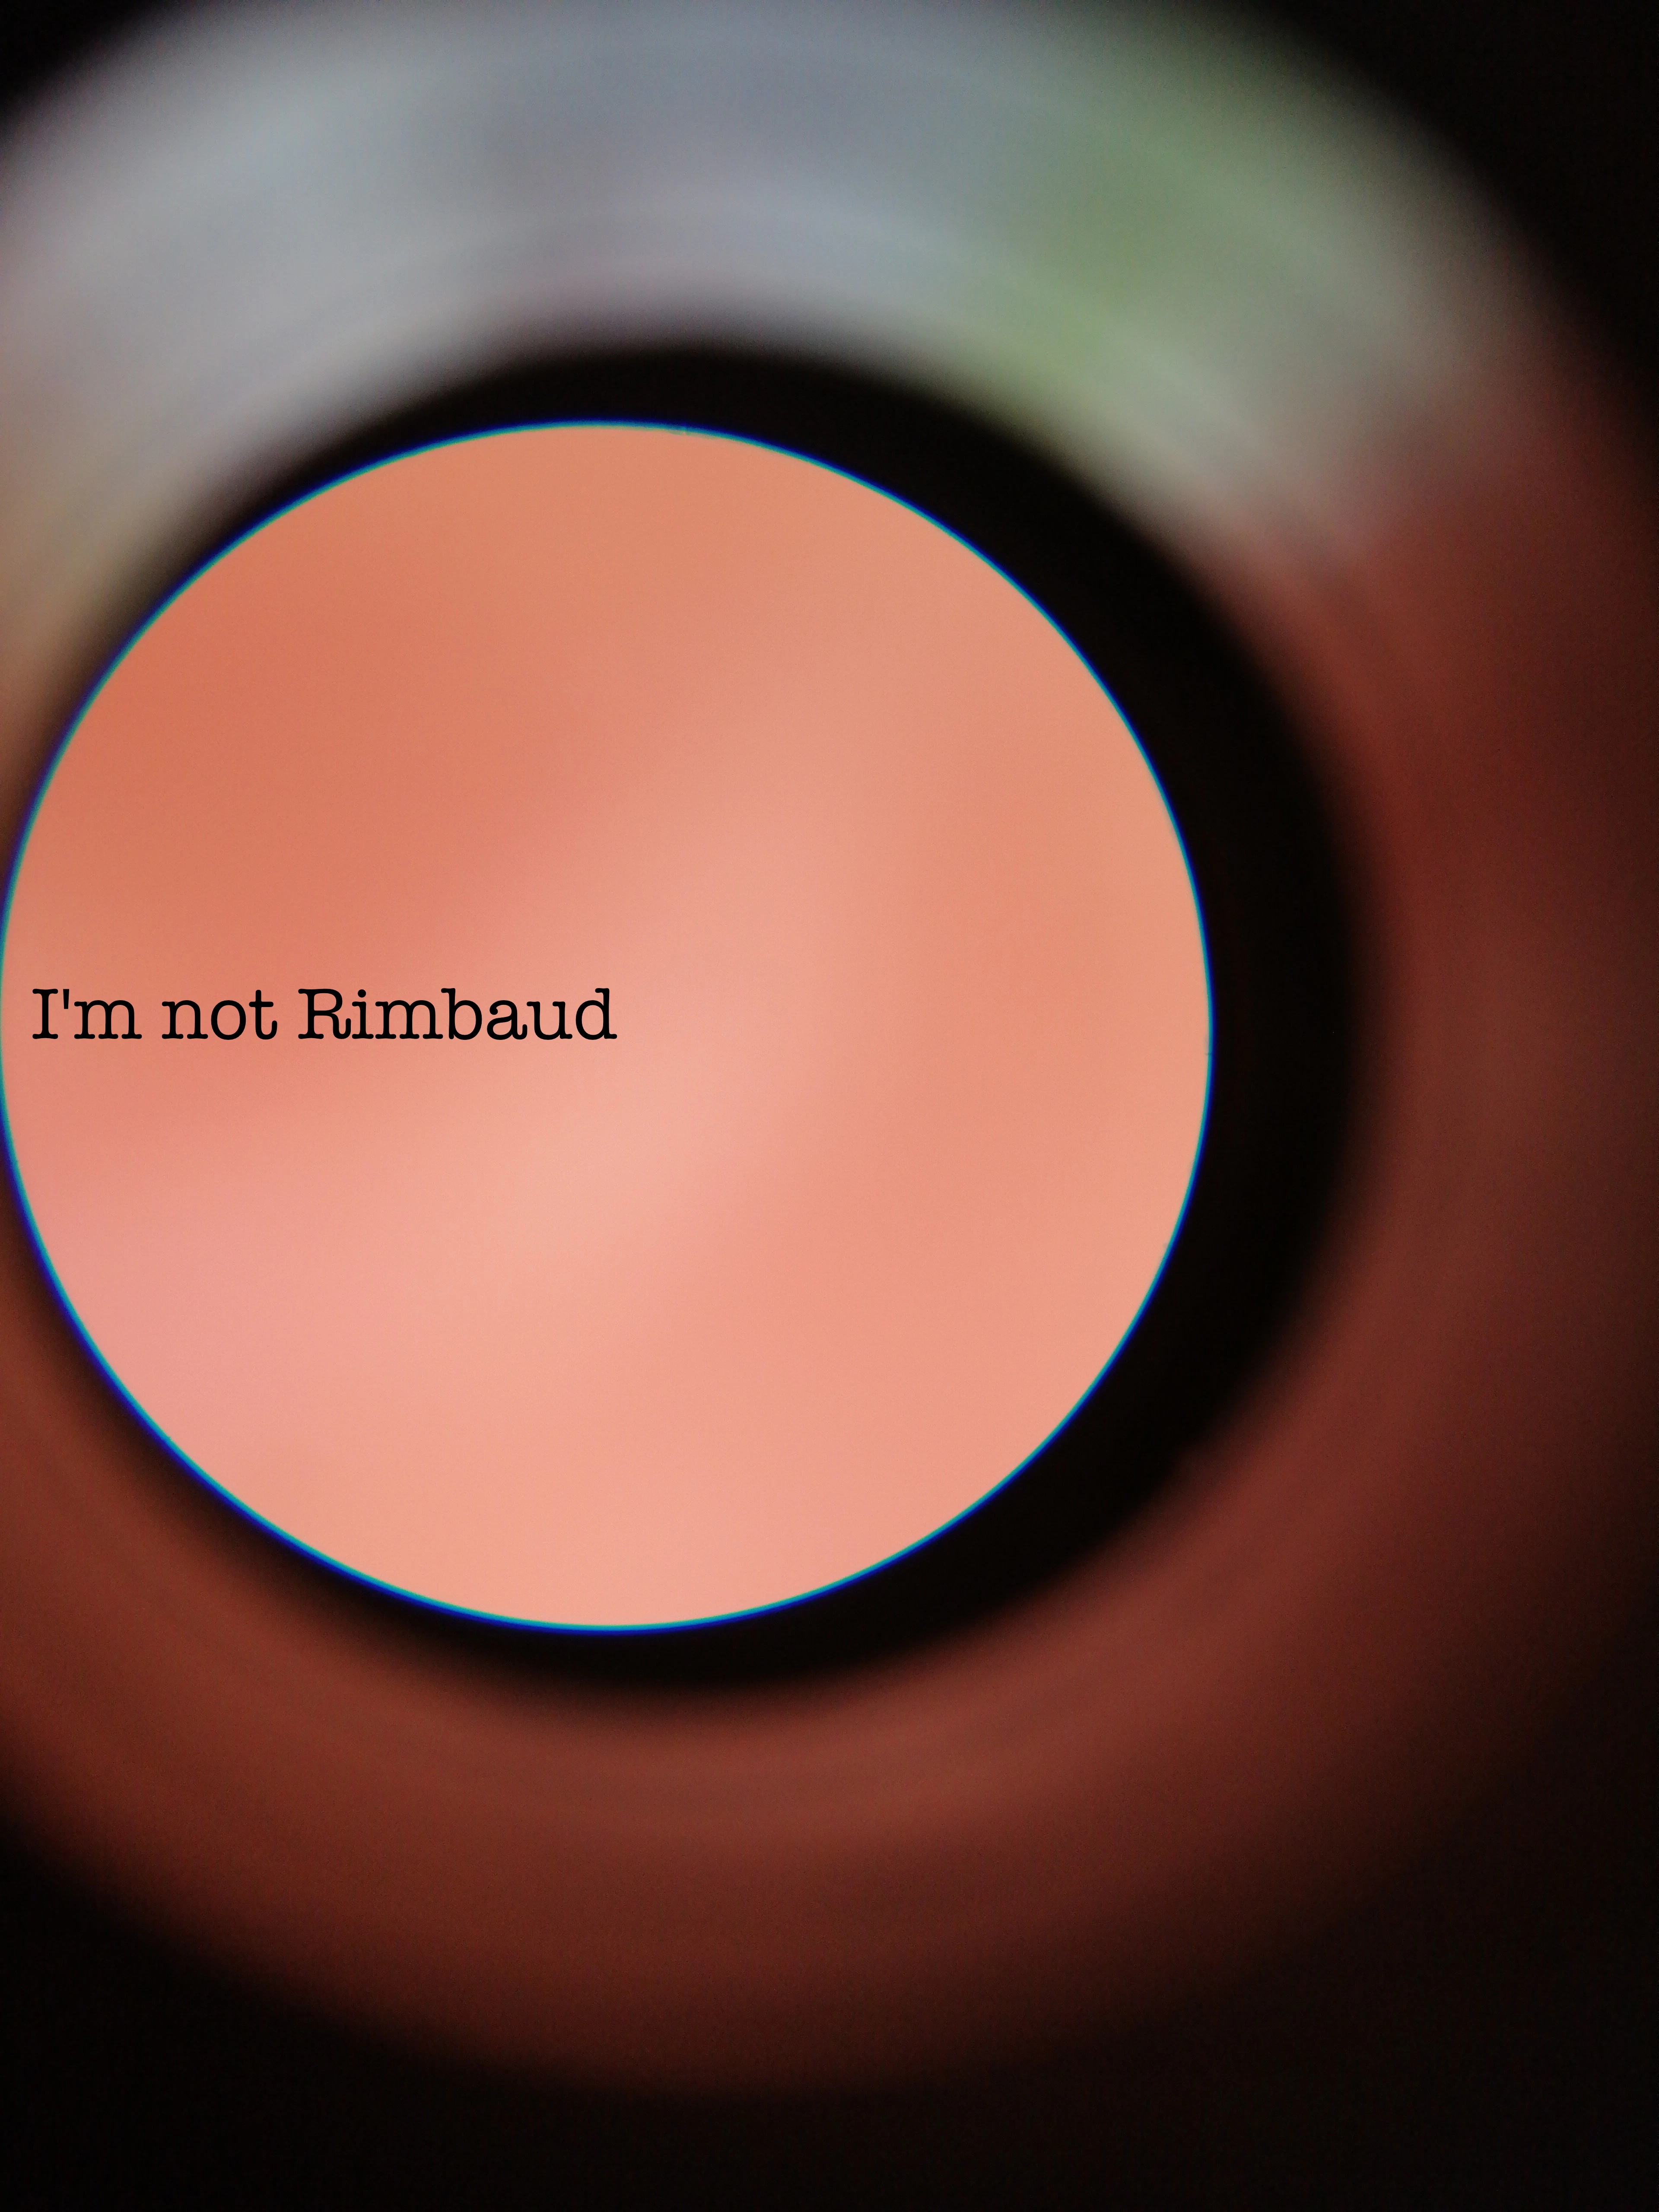 I'm not Rimbaud